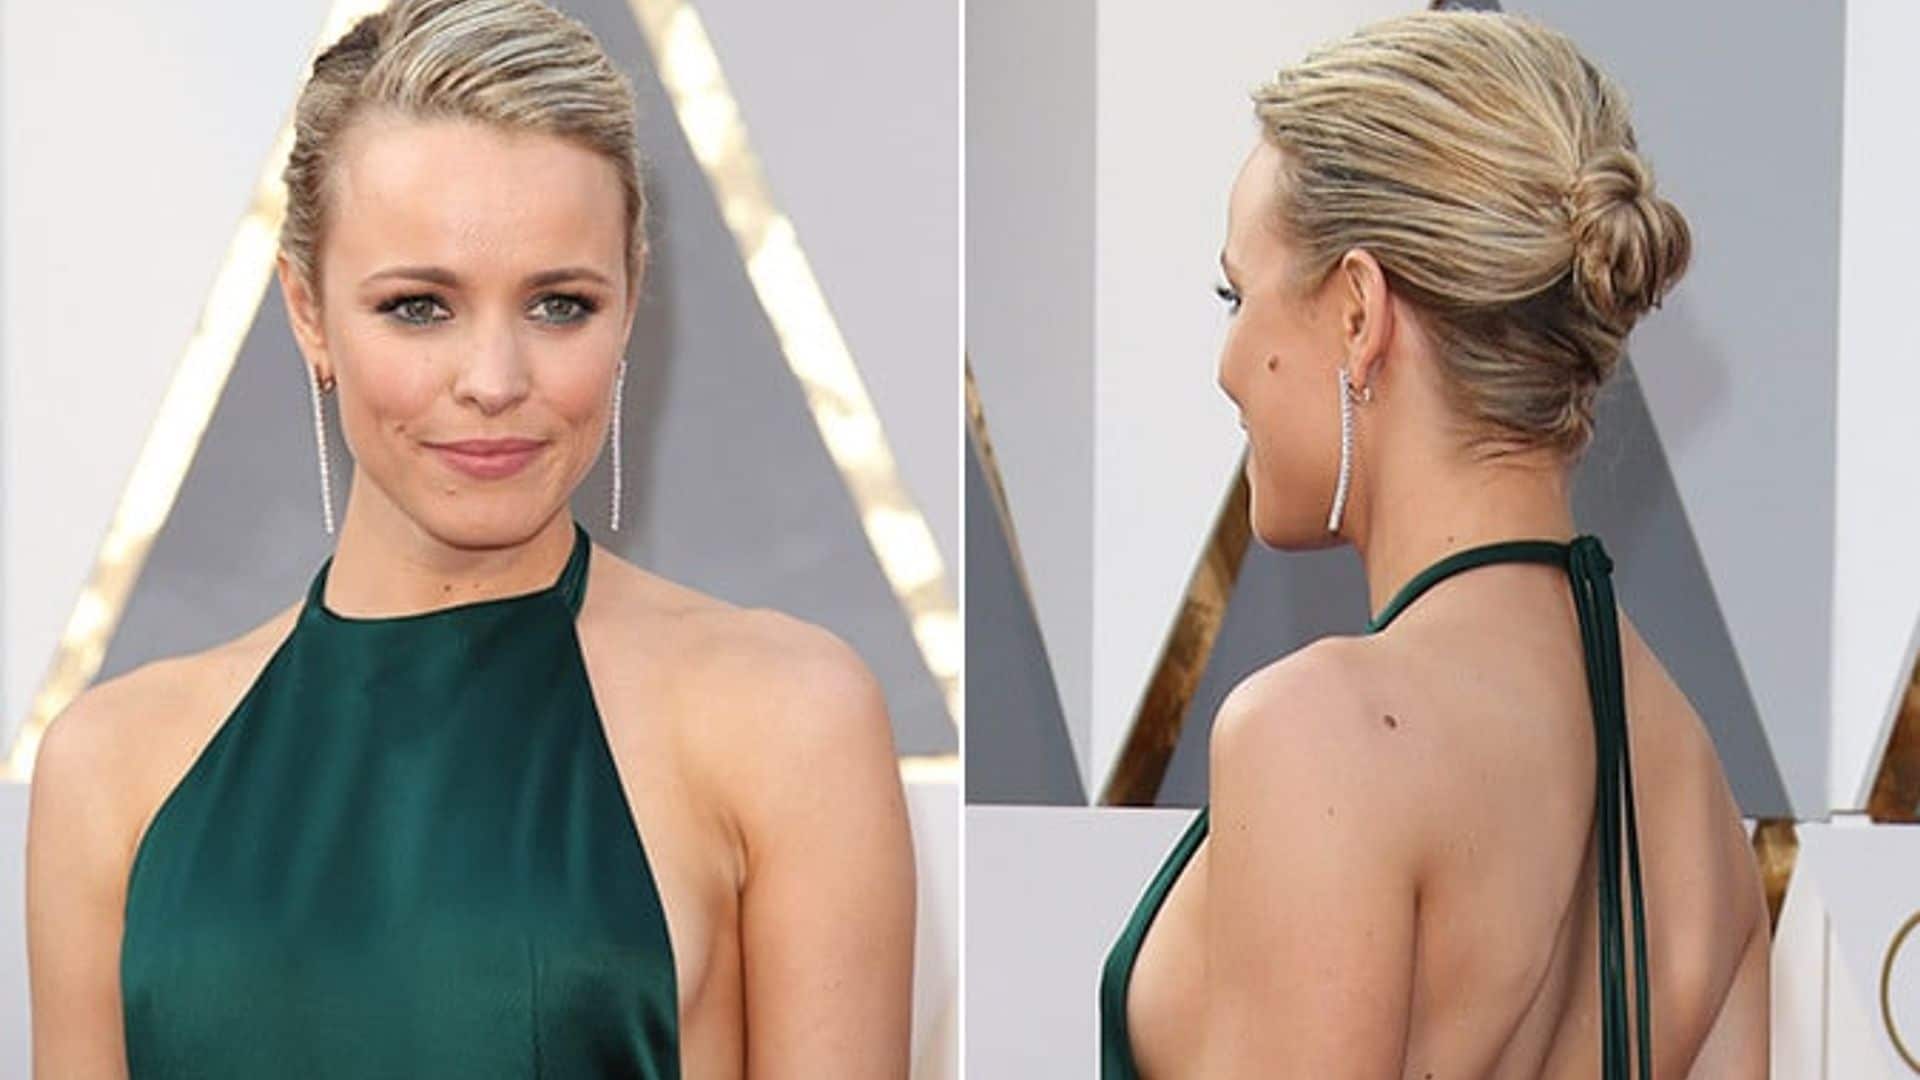 Rachel McAdams chic Oscars hairstyle: Get the look